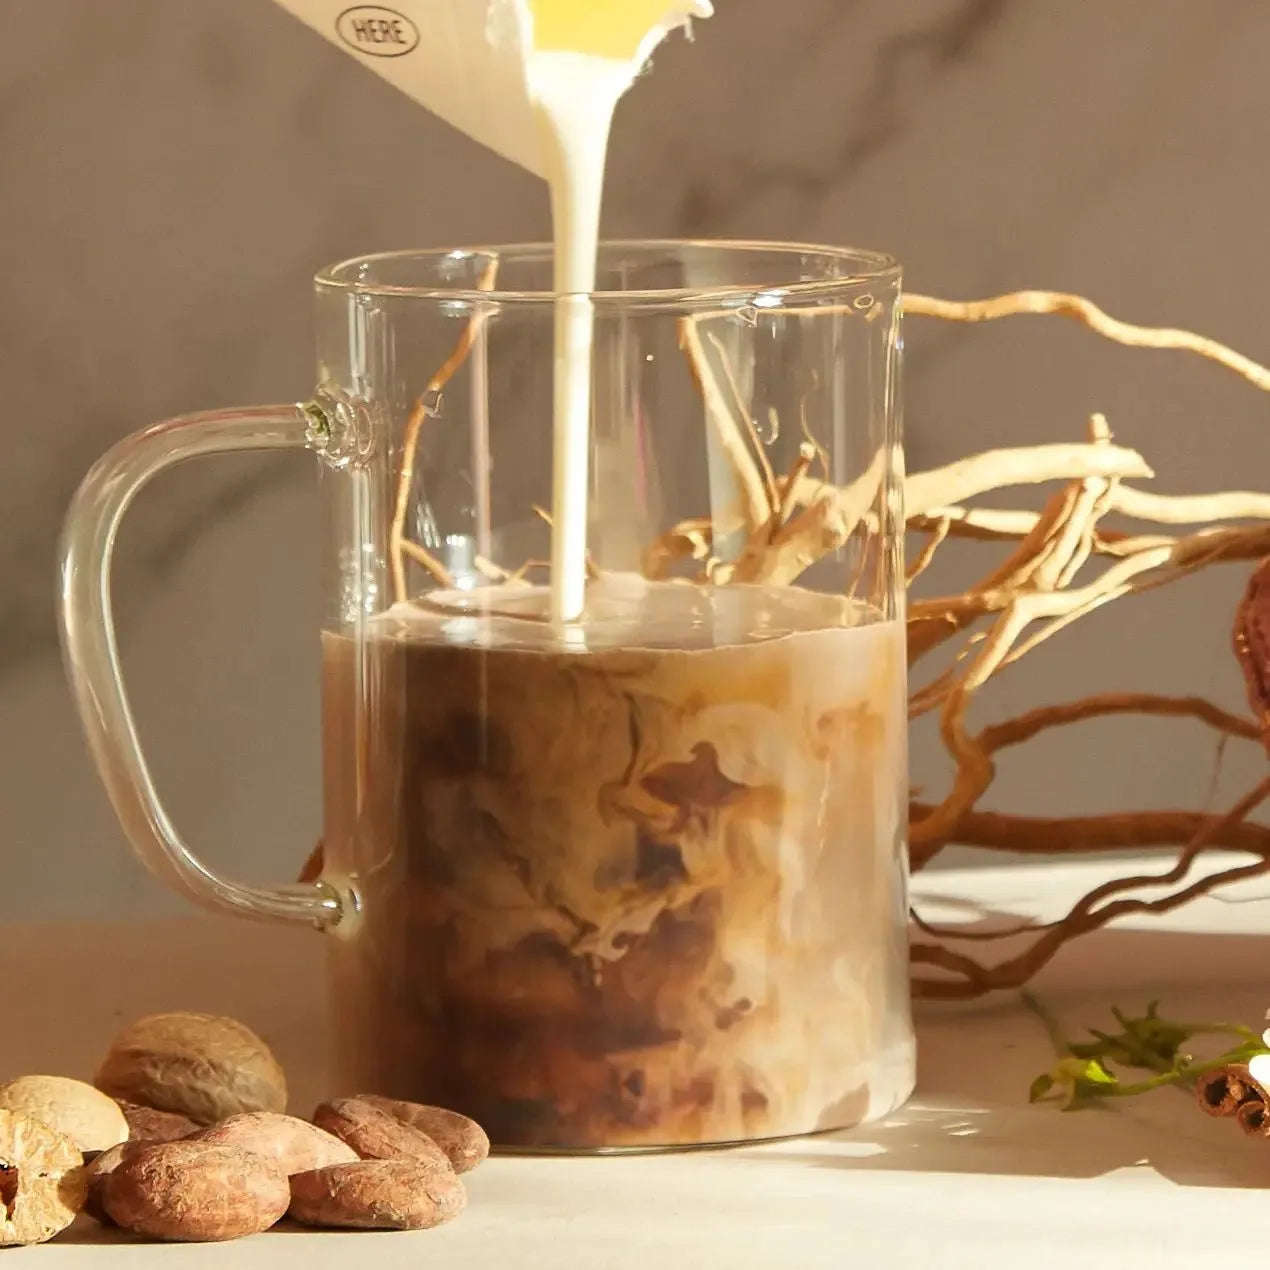 a glass mug of moment's cacao adaptogen blend